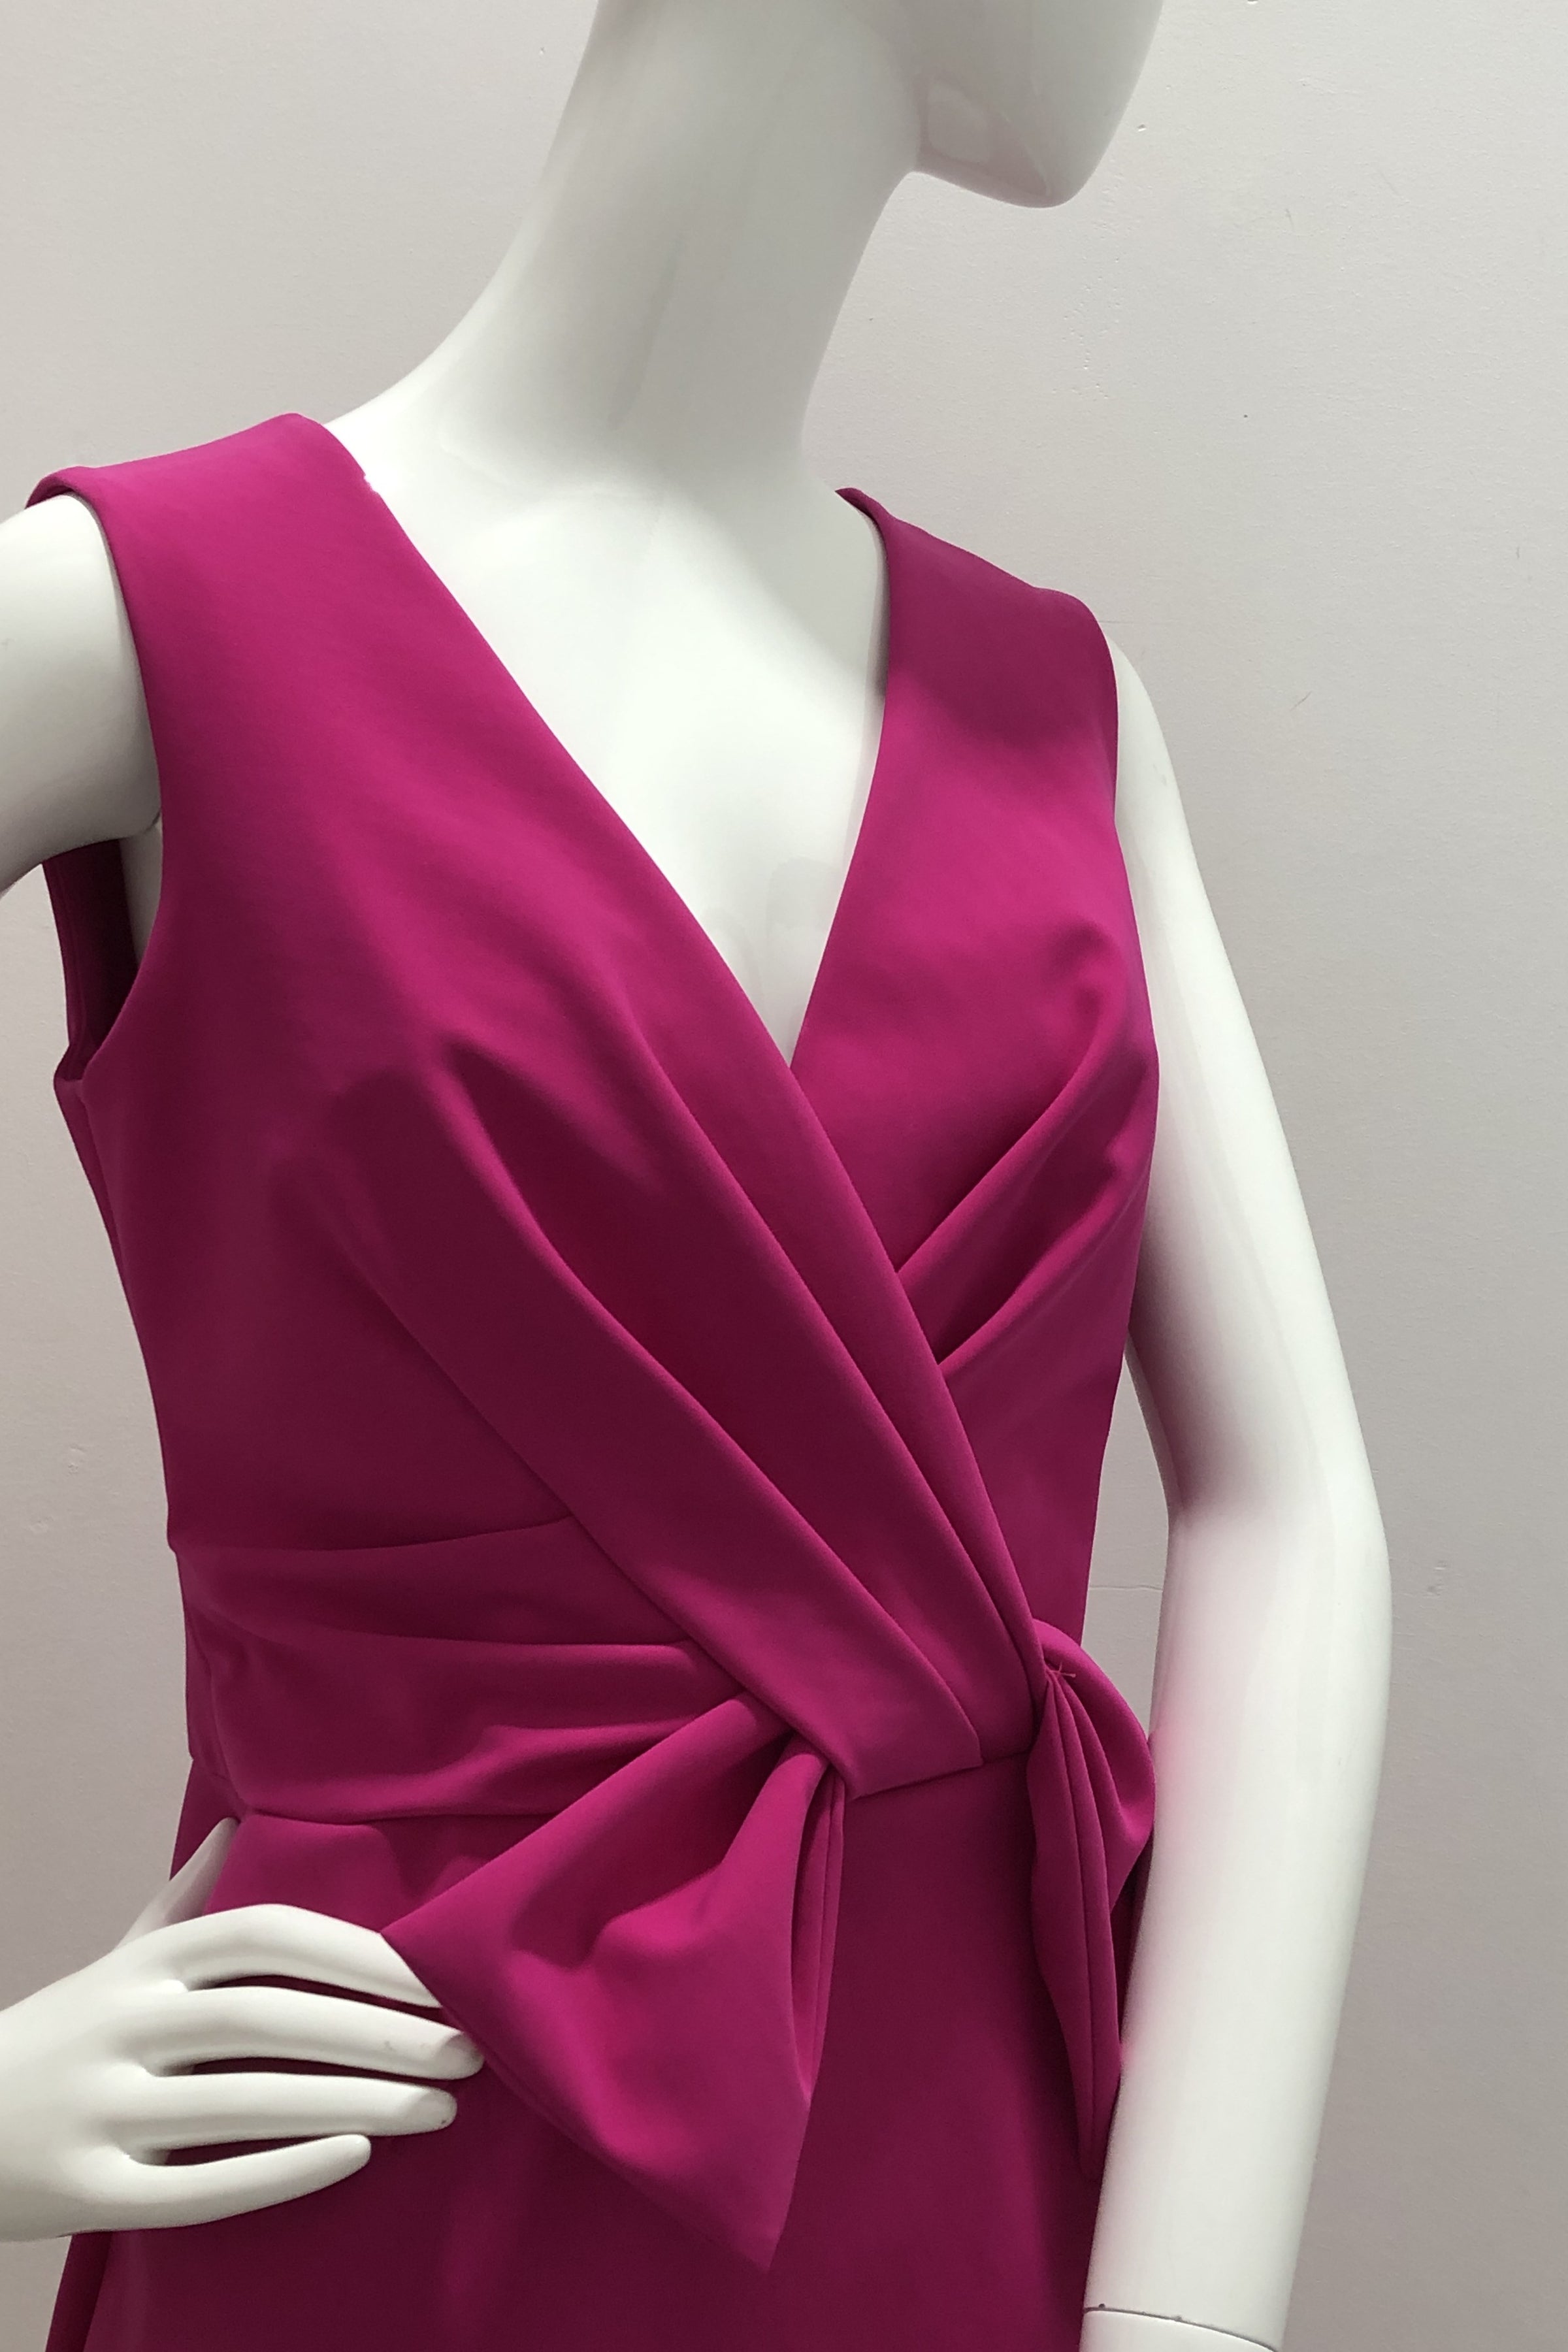 Frascara Designer Scuba Dress with Bow Detail at Waist